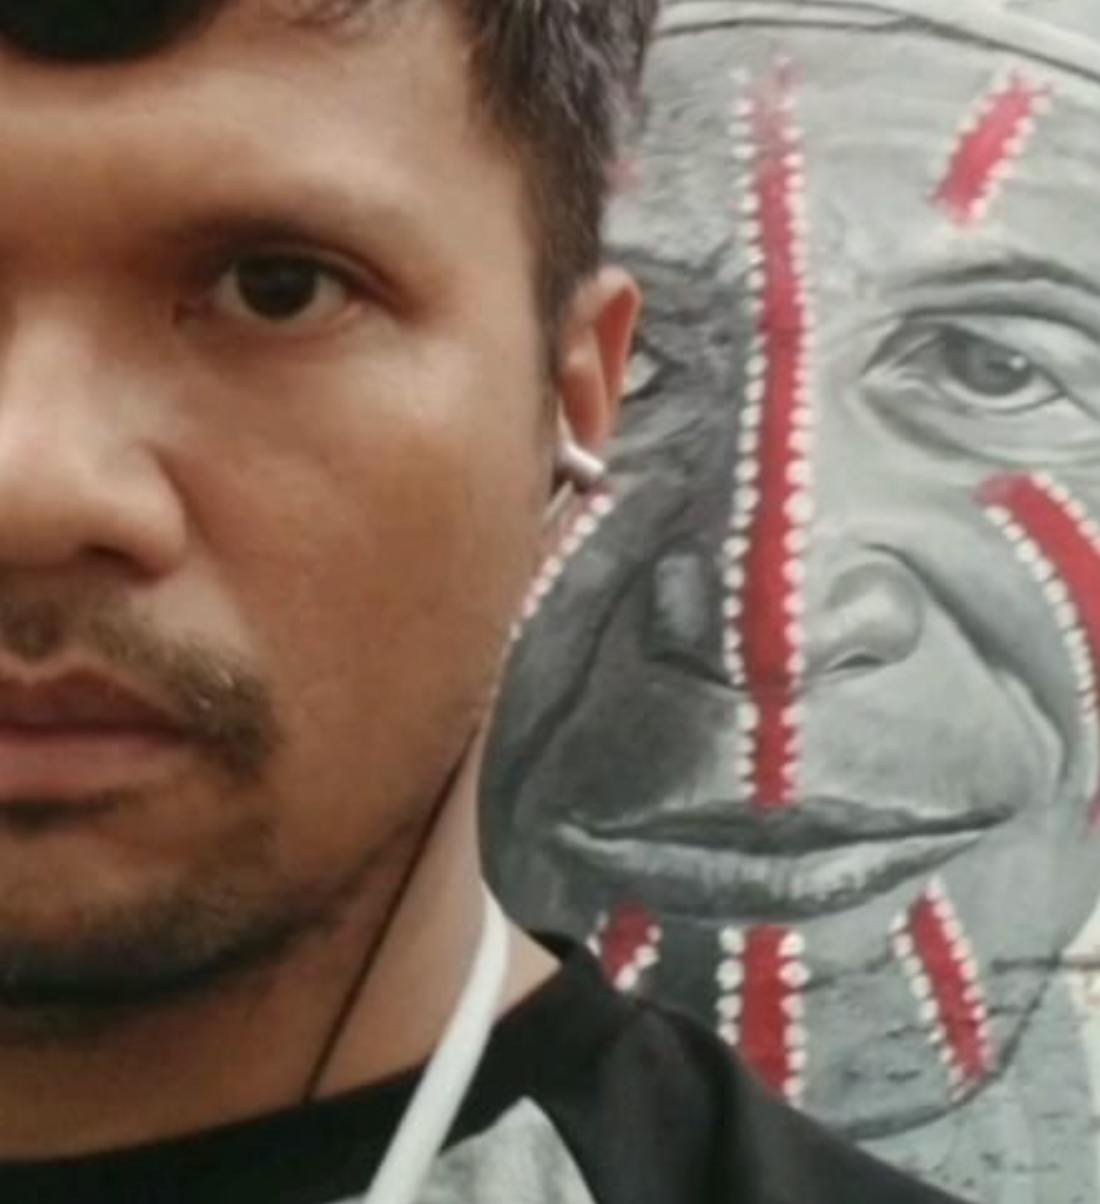 Shaq Koyok, 37 year-old Indigenous artist and activist